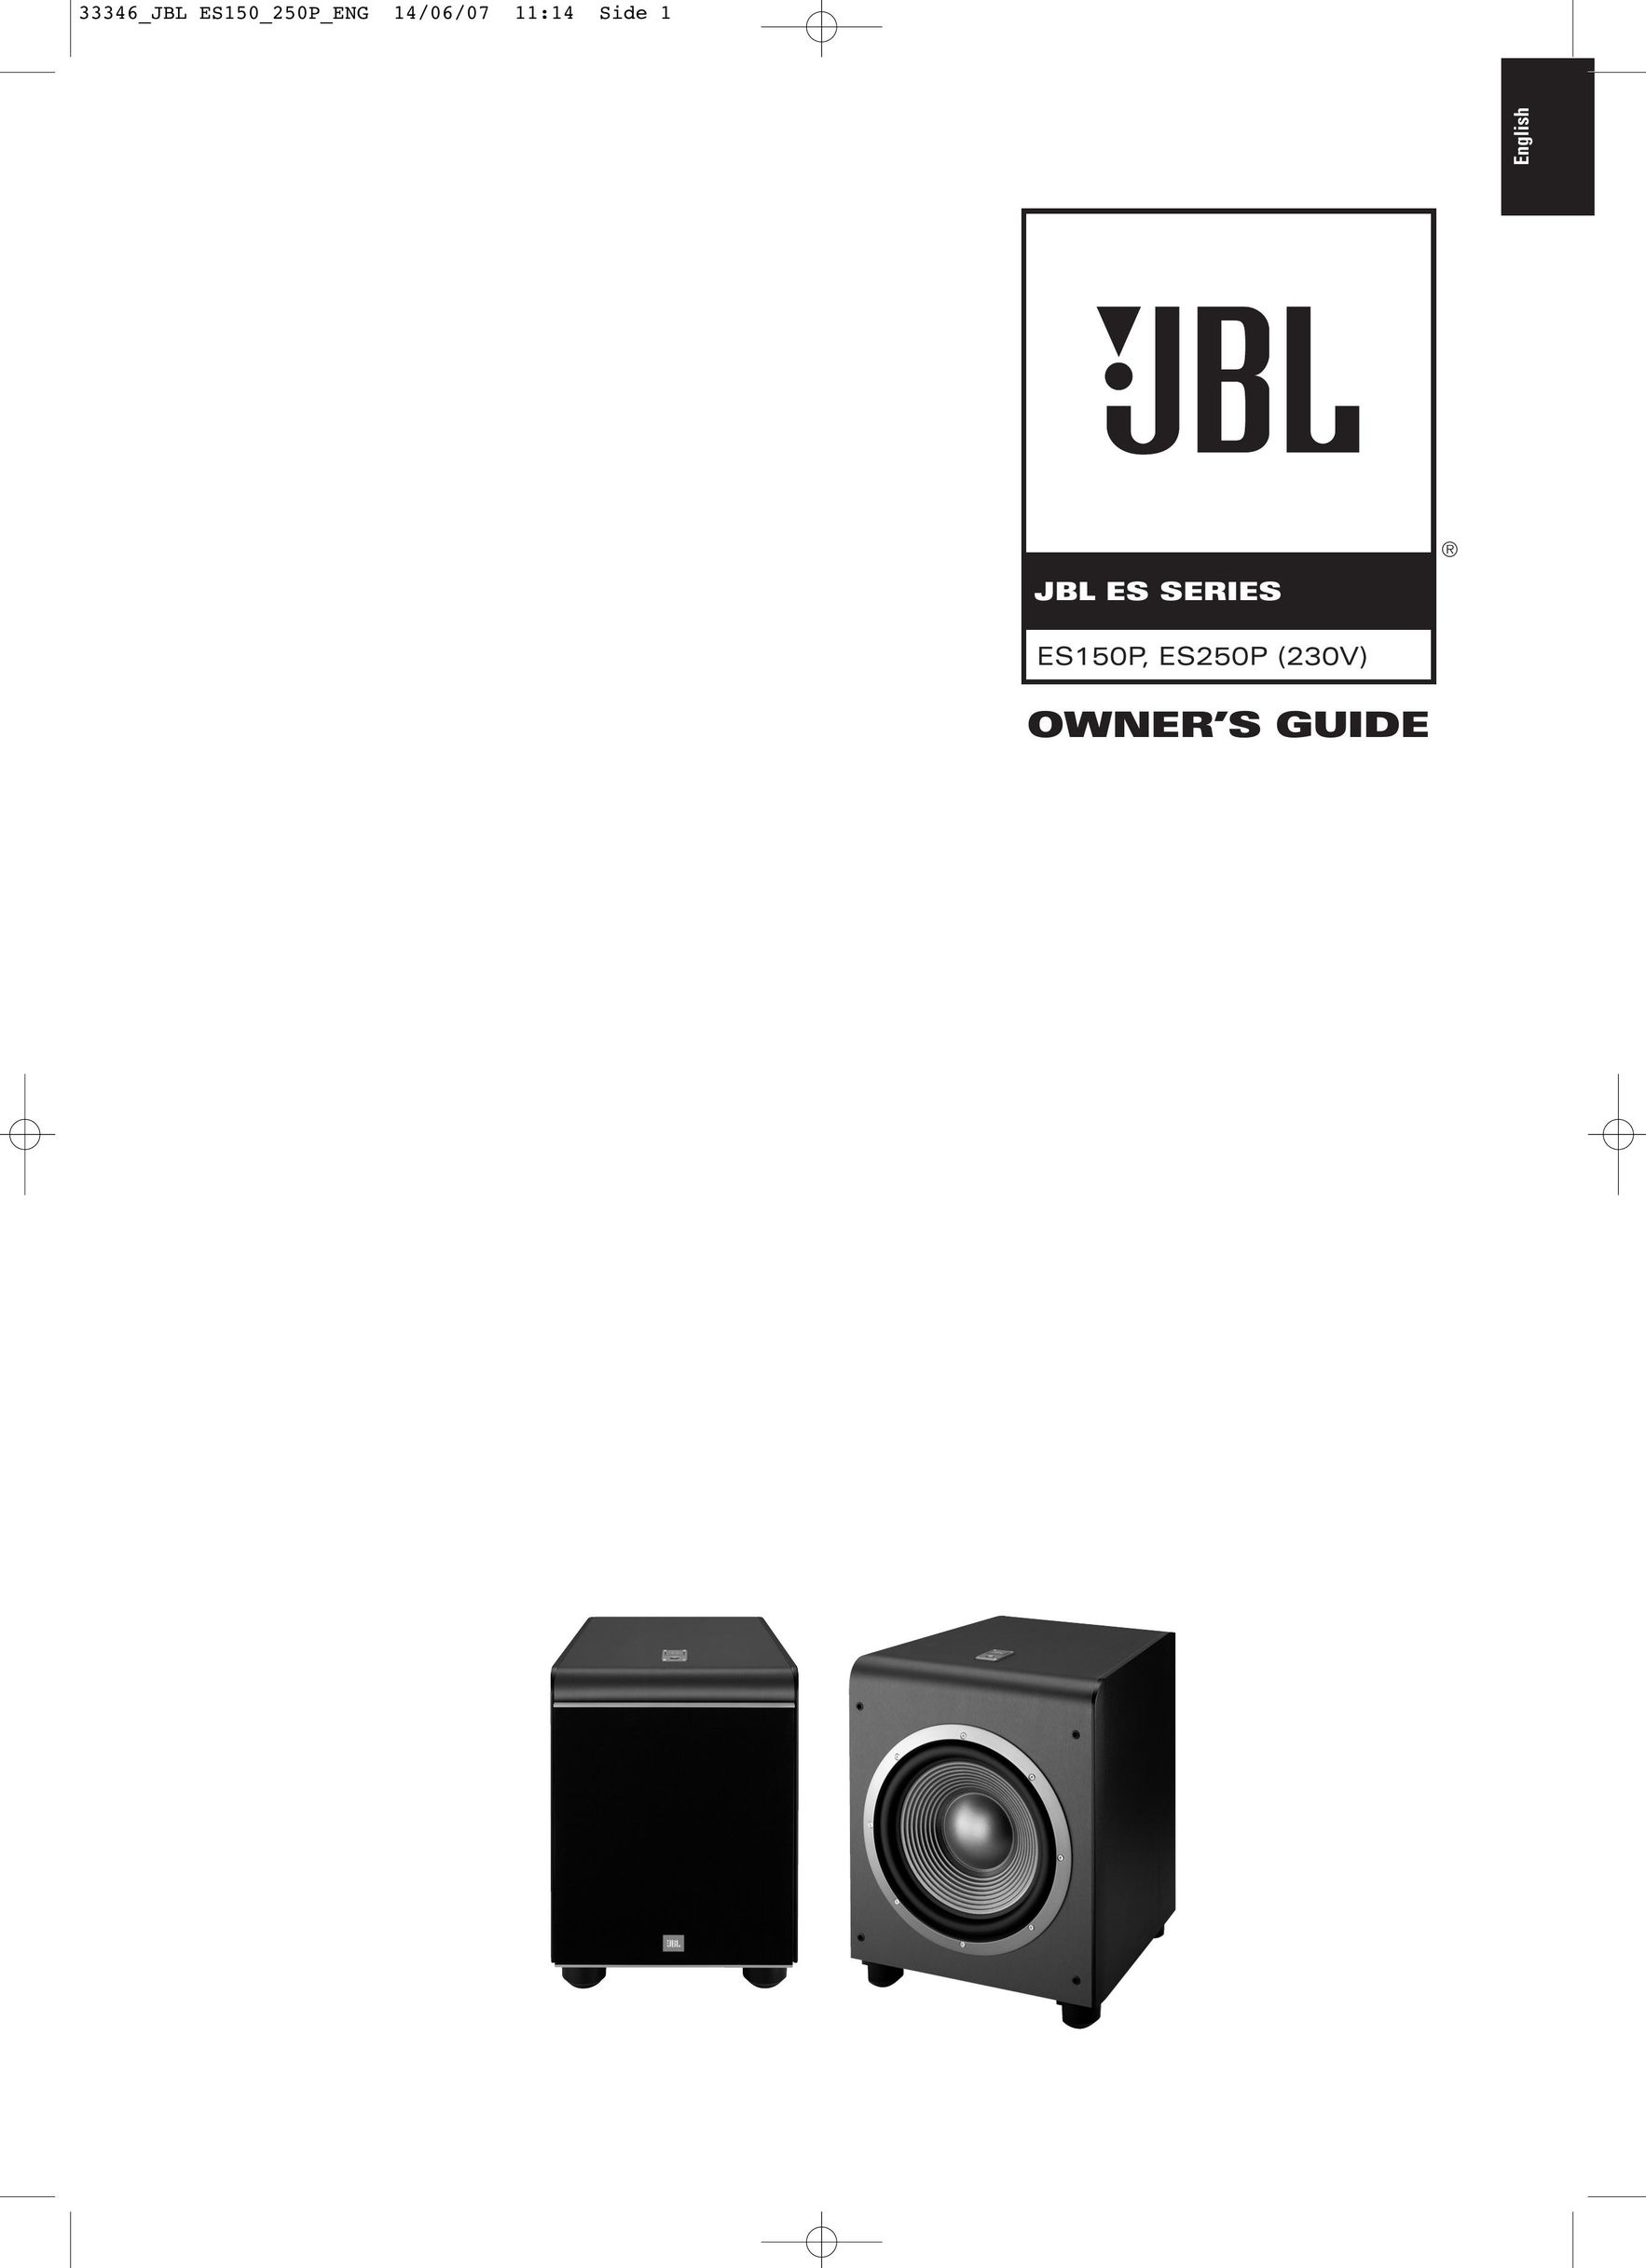 JBL ES250P (230V) Portable Speaker User Manual